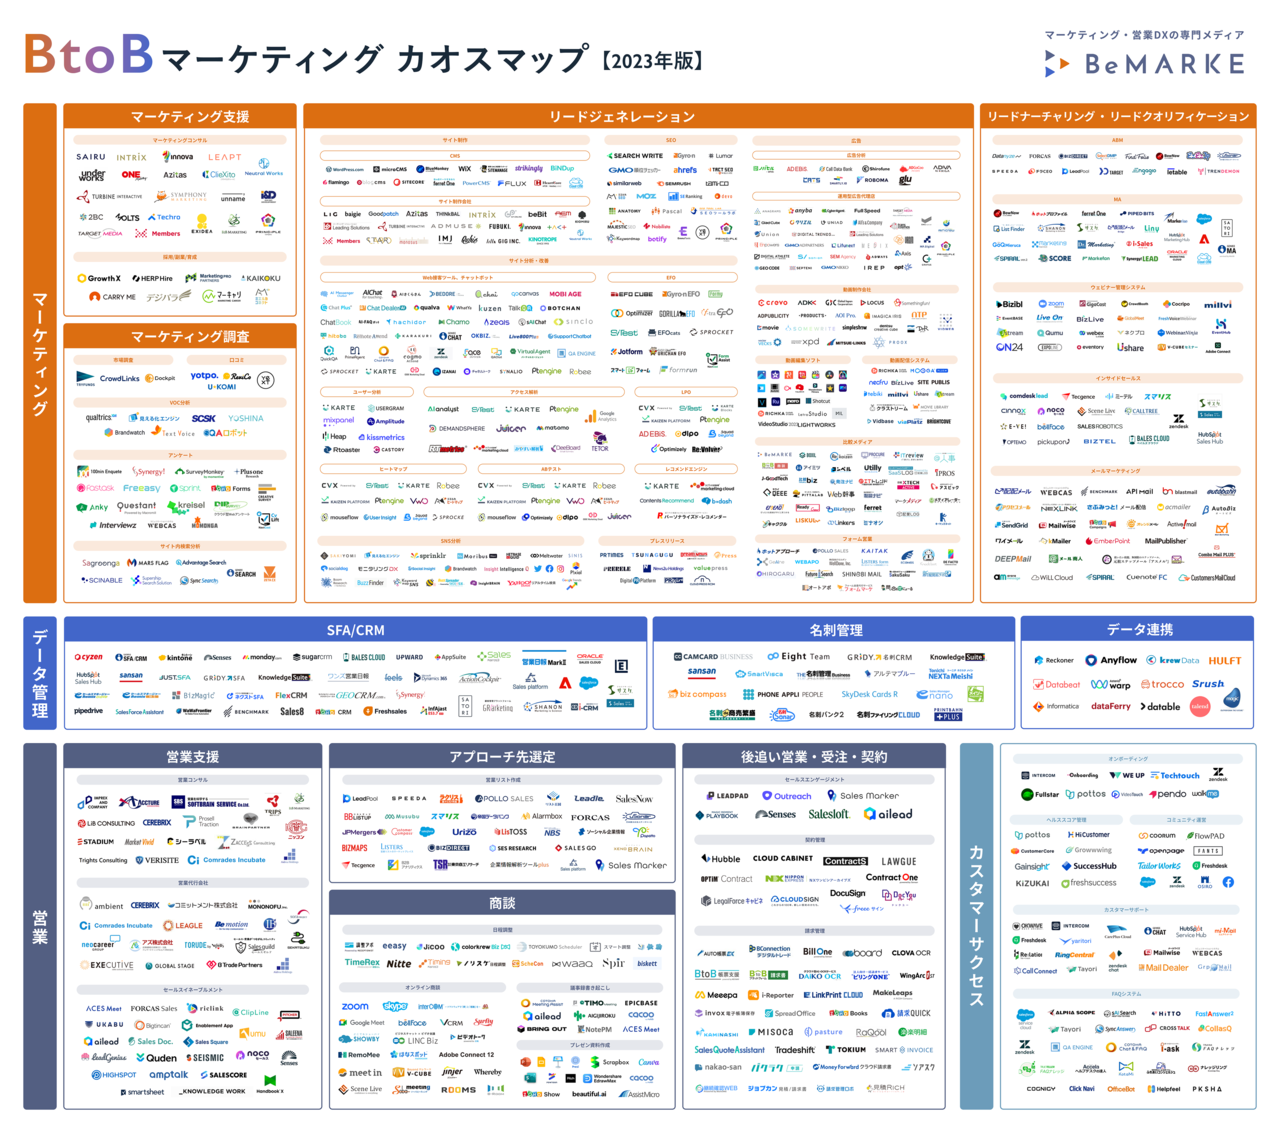 「BtoBマーケティングカオスマップ【2023年版】」が公開